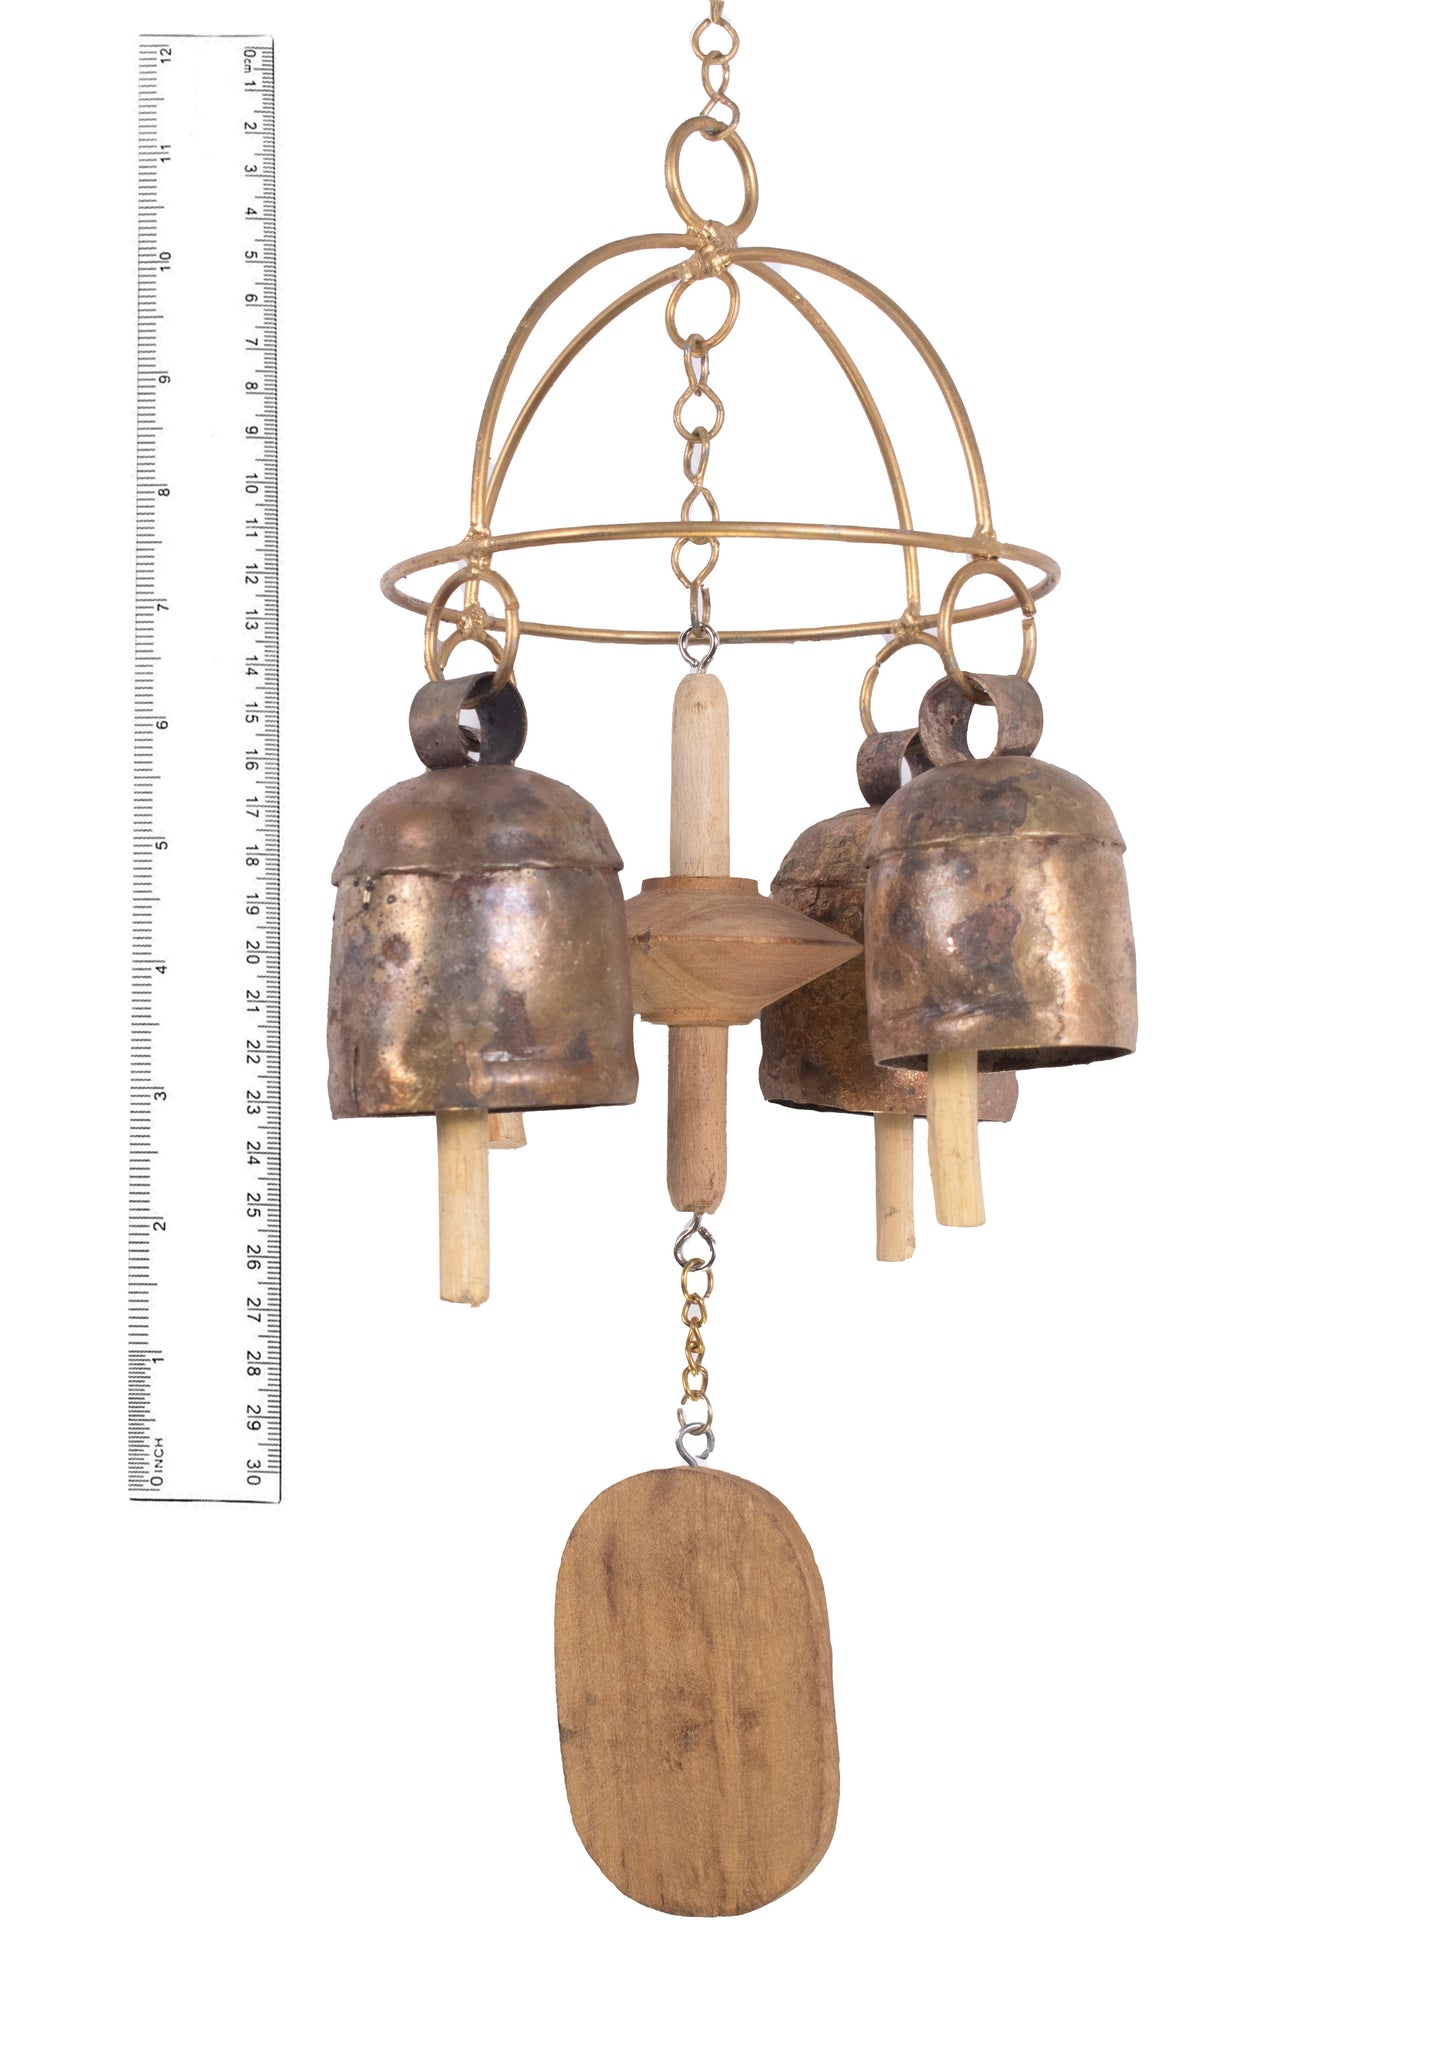 Hand Made Metal Bells Wrought Iron Copper-Zinc Coated Home Décor Chimes Cow Bell   - Zummer - Metal and Wood - 4 Bells  -  SKU: 0060